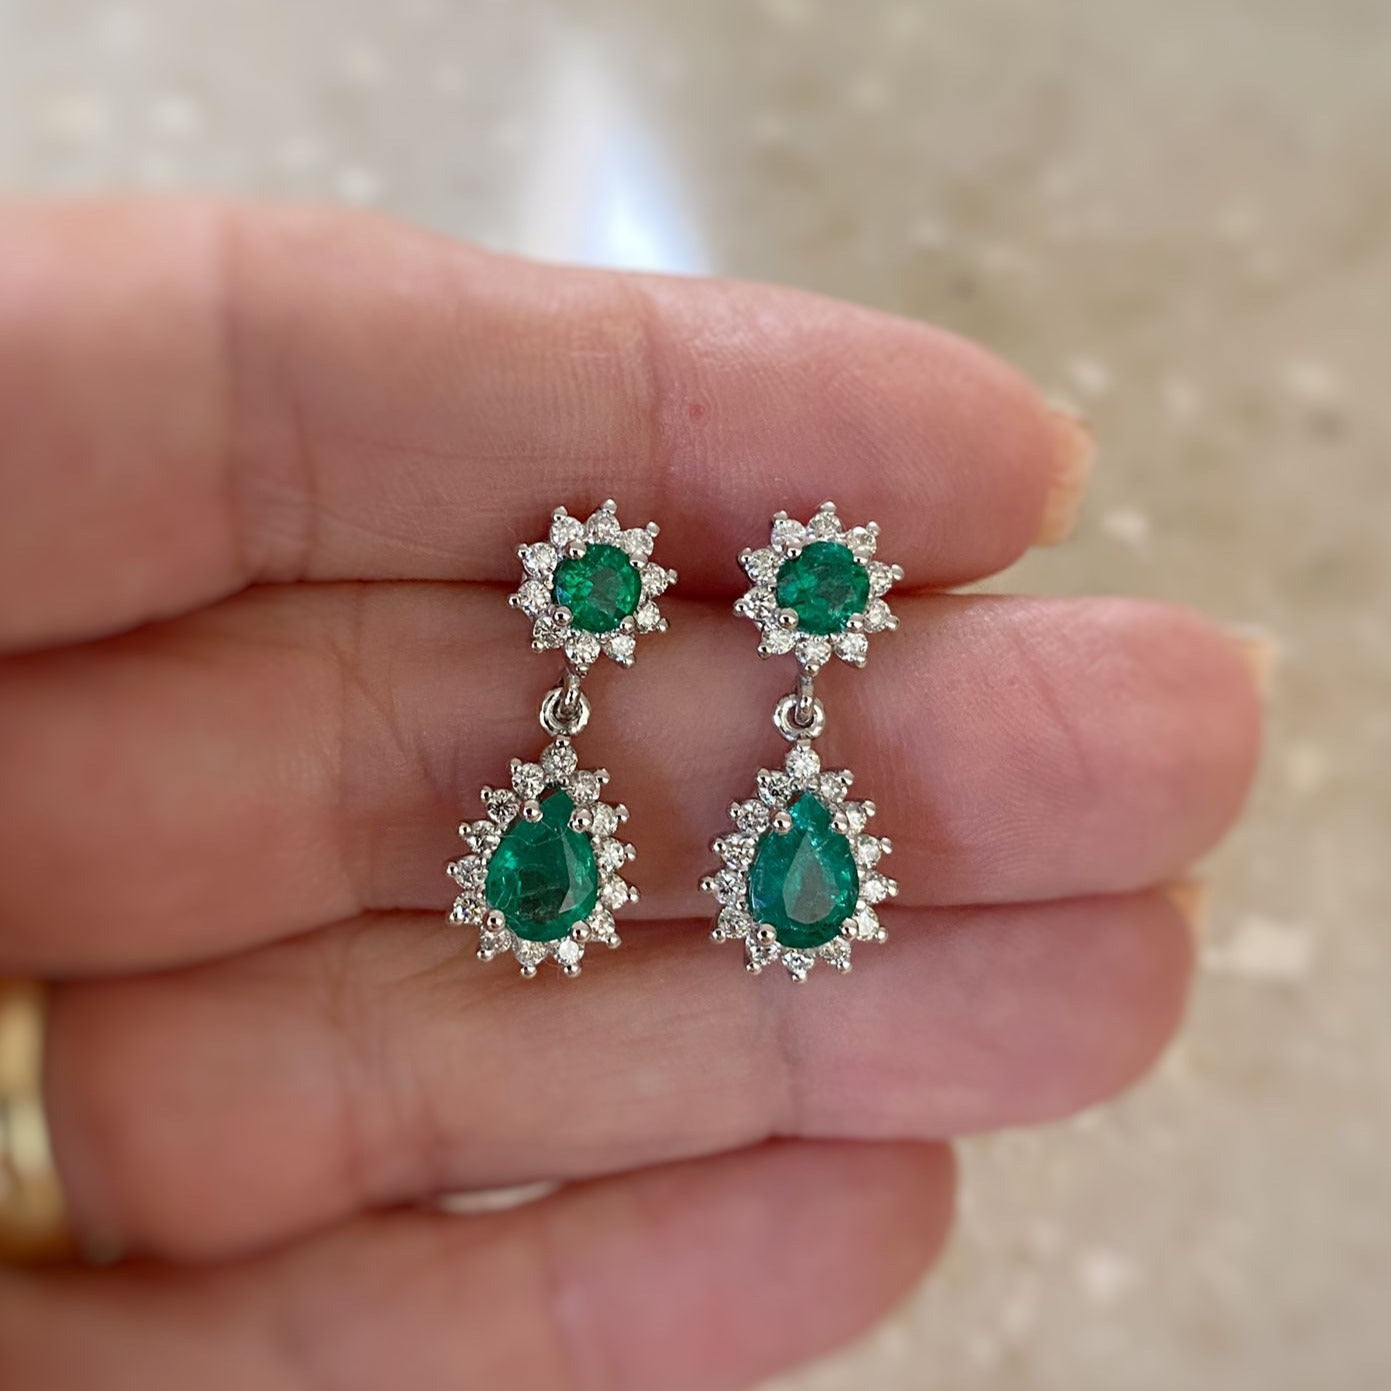 emerald and diamond earrings 